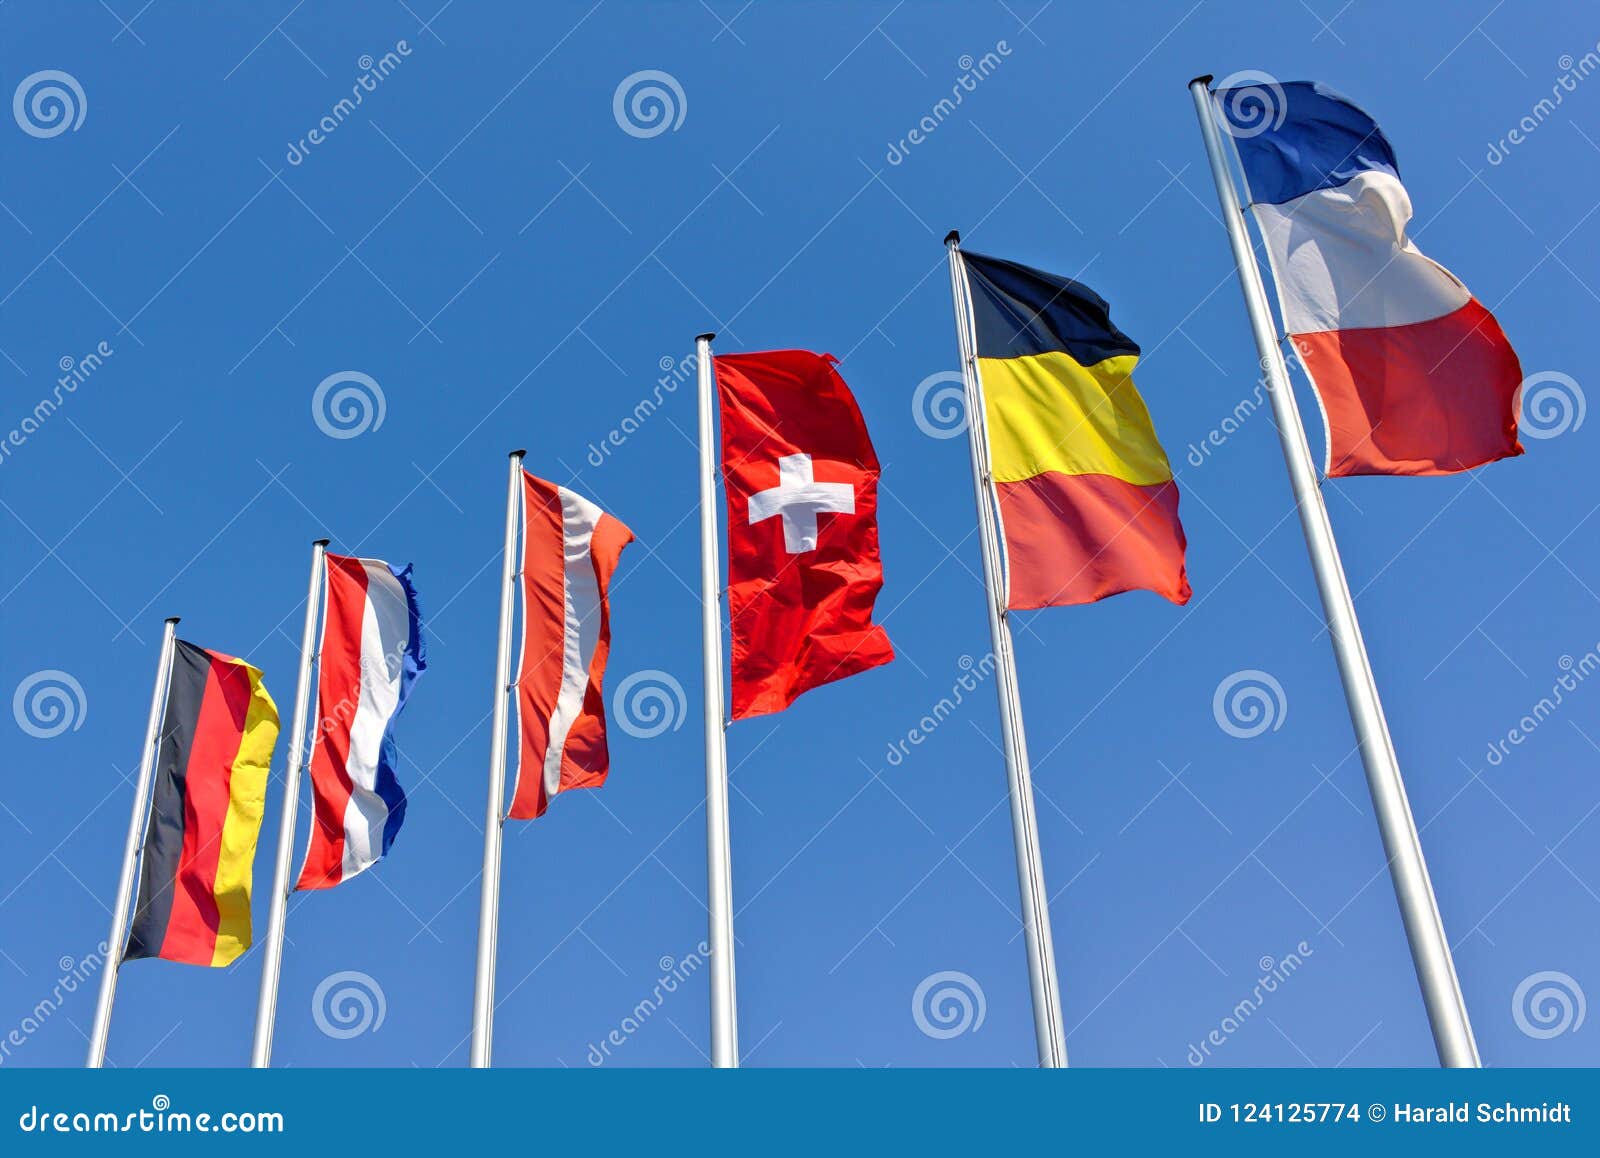 Германия франция австрия швейцария. Германия Австрия Бельгия флаги. Флаги Германии Австрии и Швейцарии. Внешнеэкономические связи Швейцарии. Австрийский и немецкий флаги.